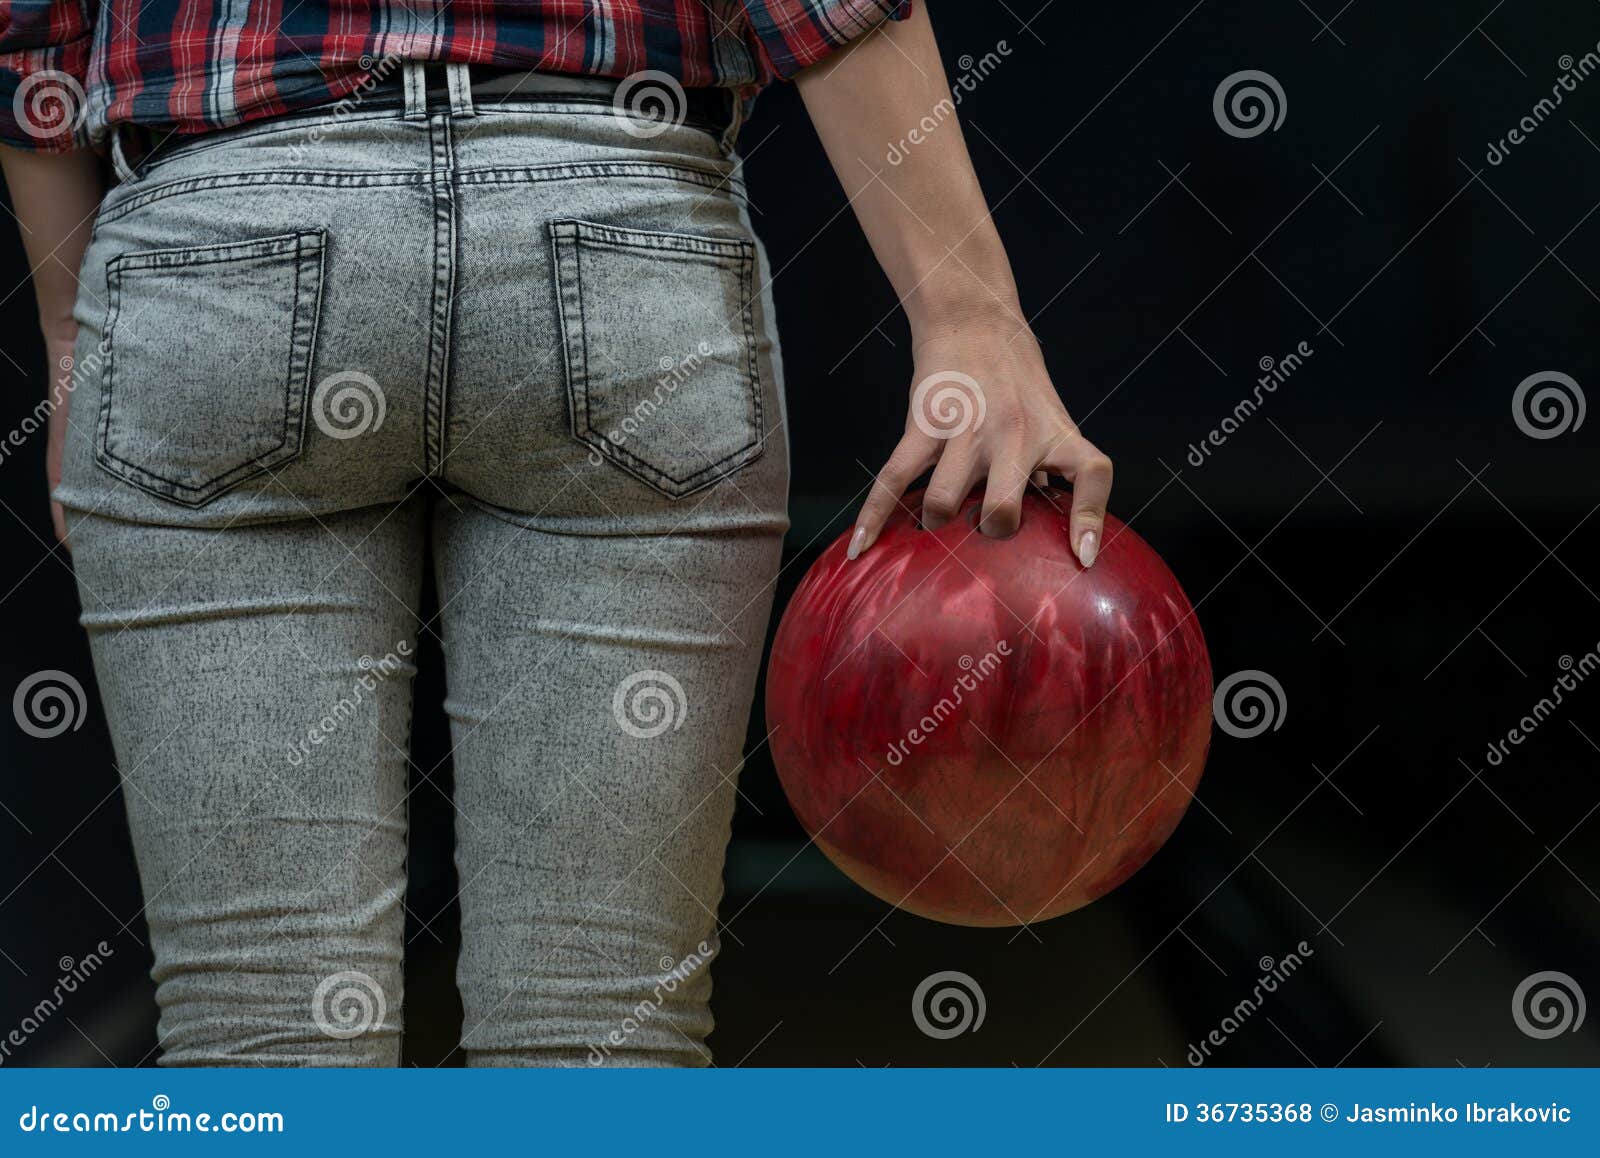 celeste bezuidenhout recommends bowling ball up ass pic